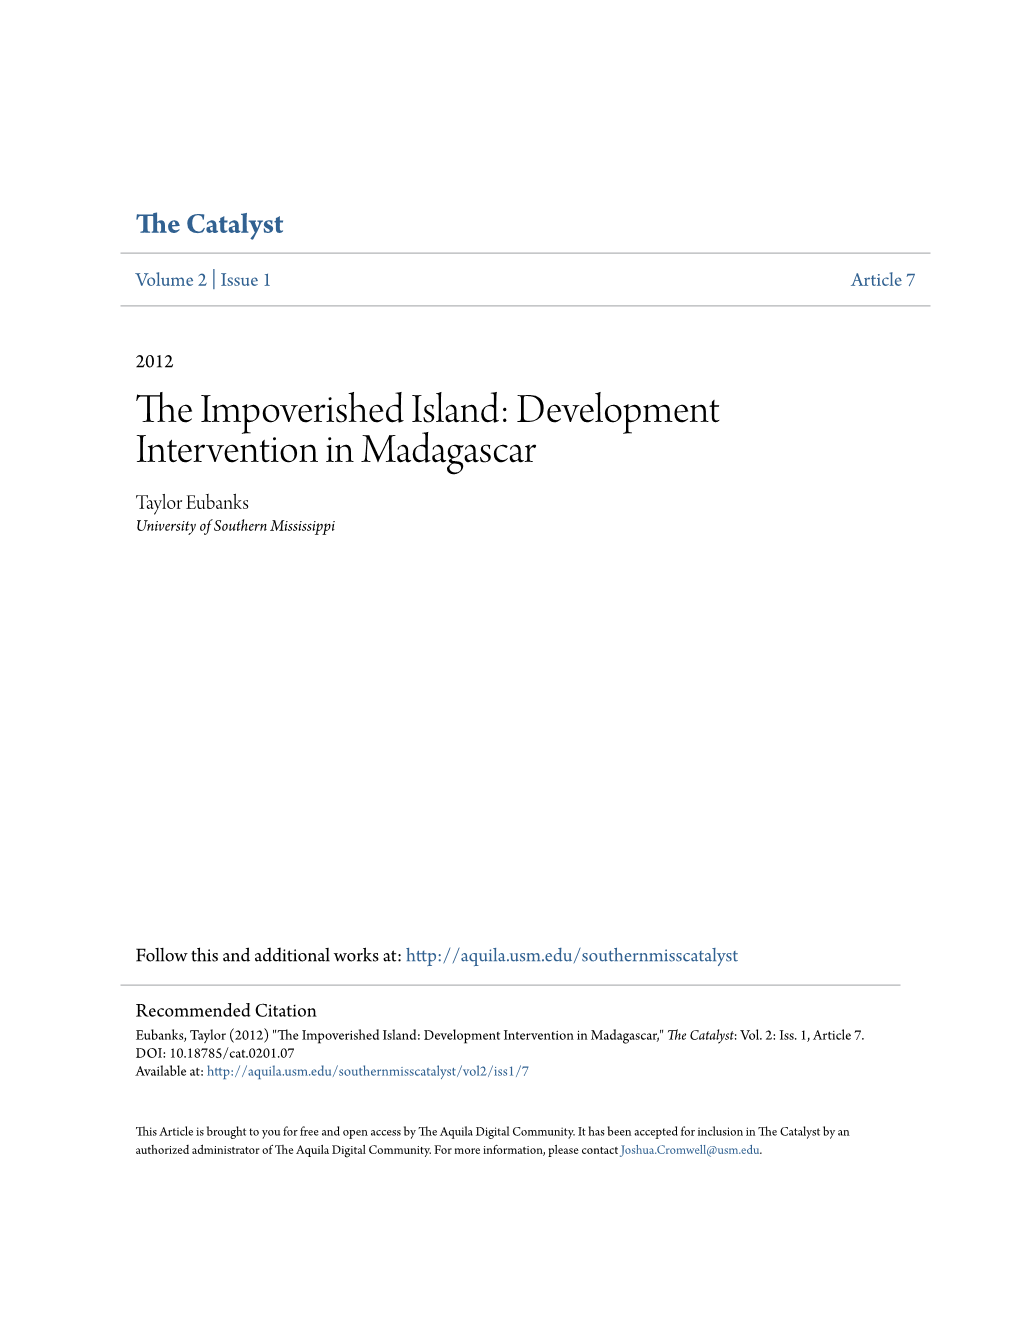 Development Intervention in Madagascar Taylor Eubanks University of Southern Mississippi